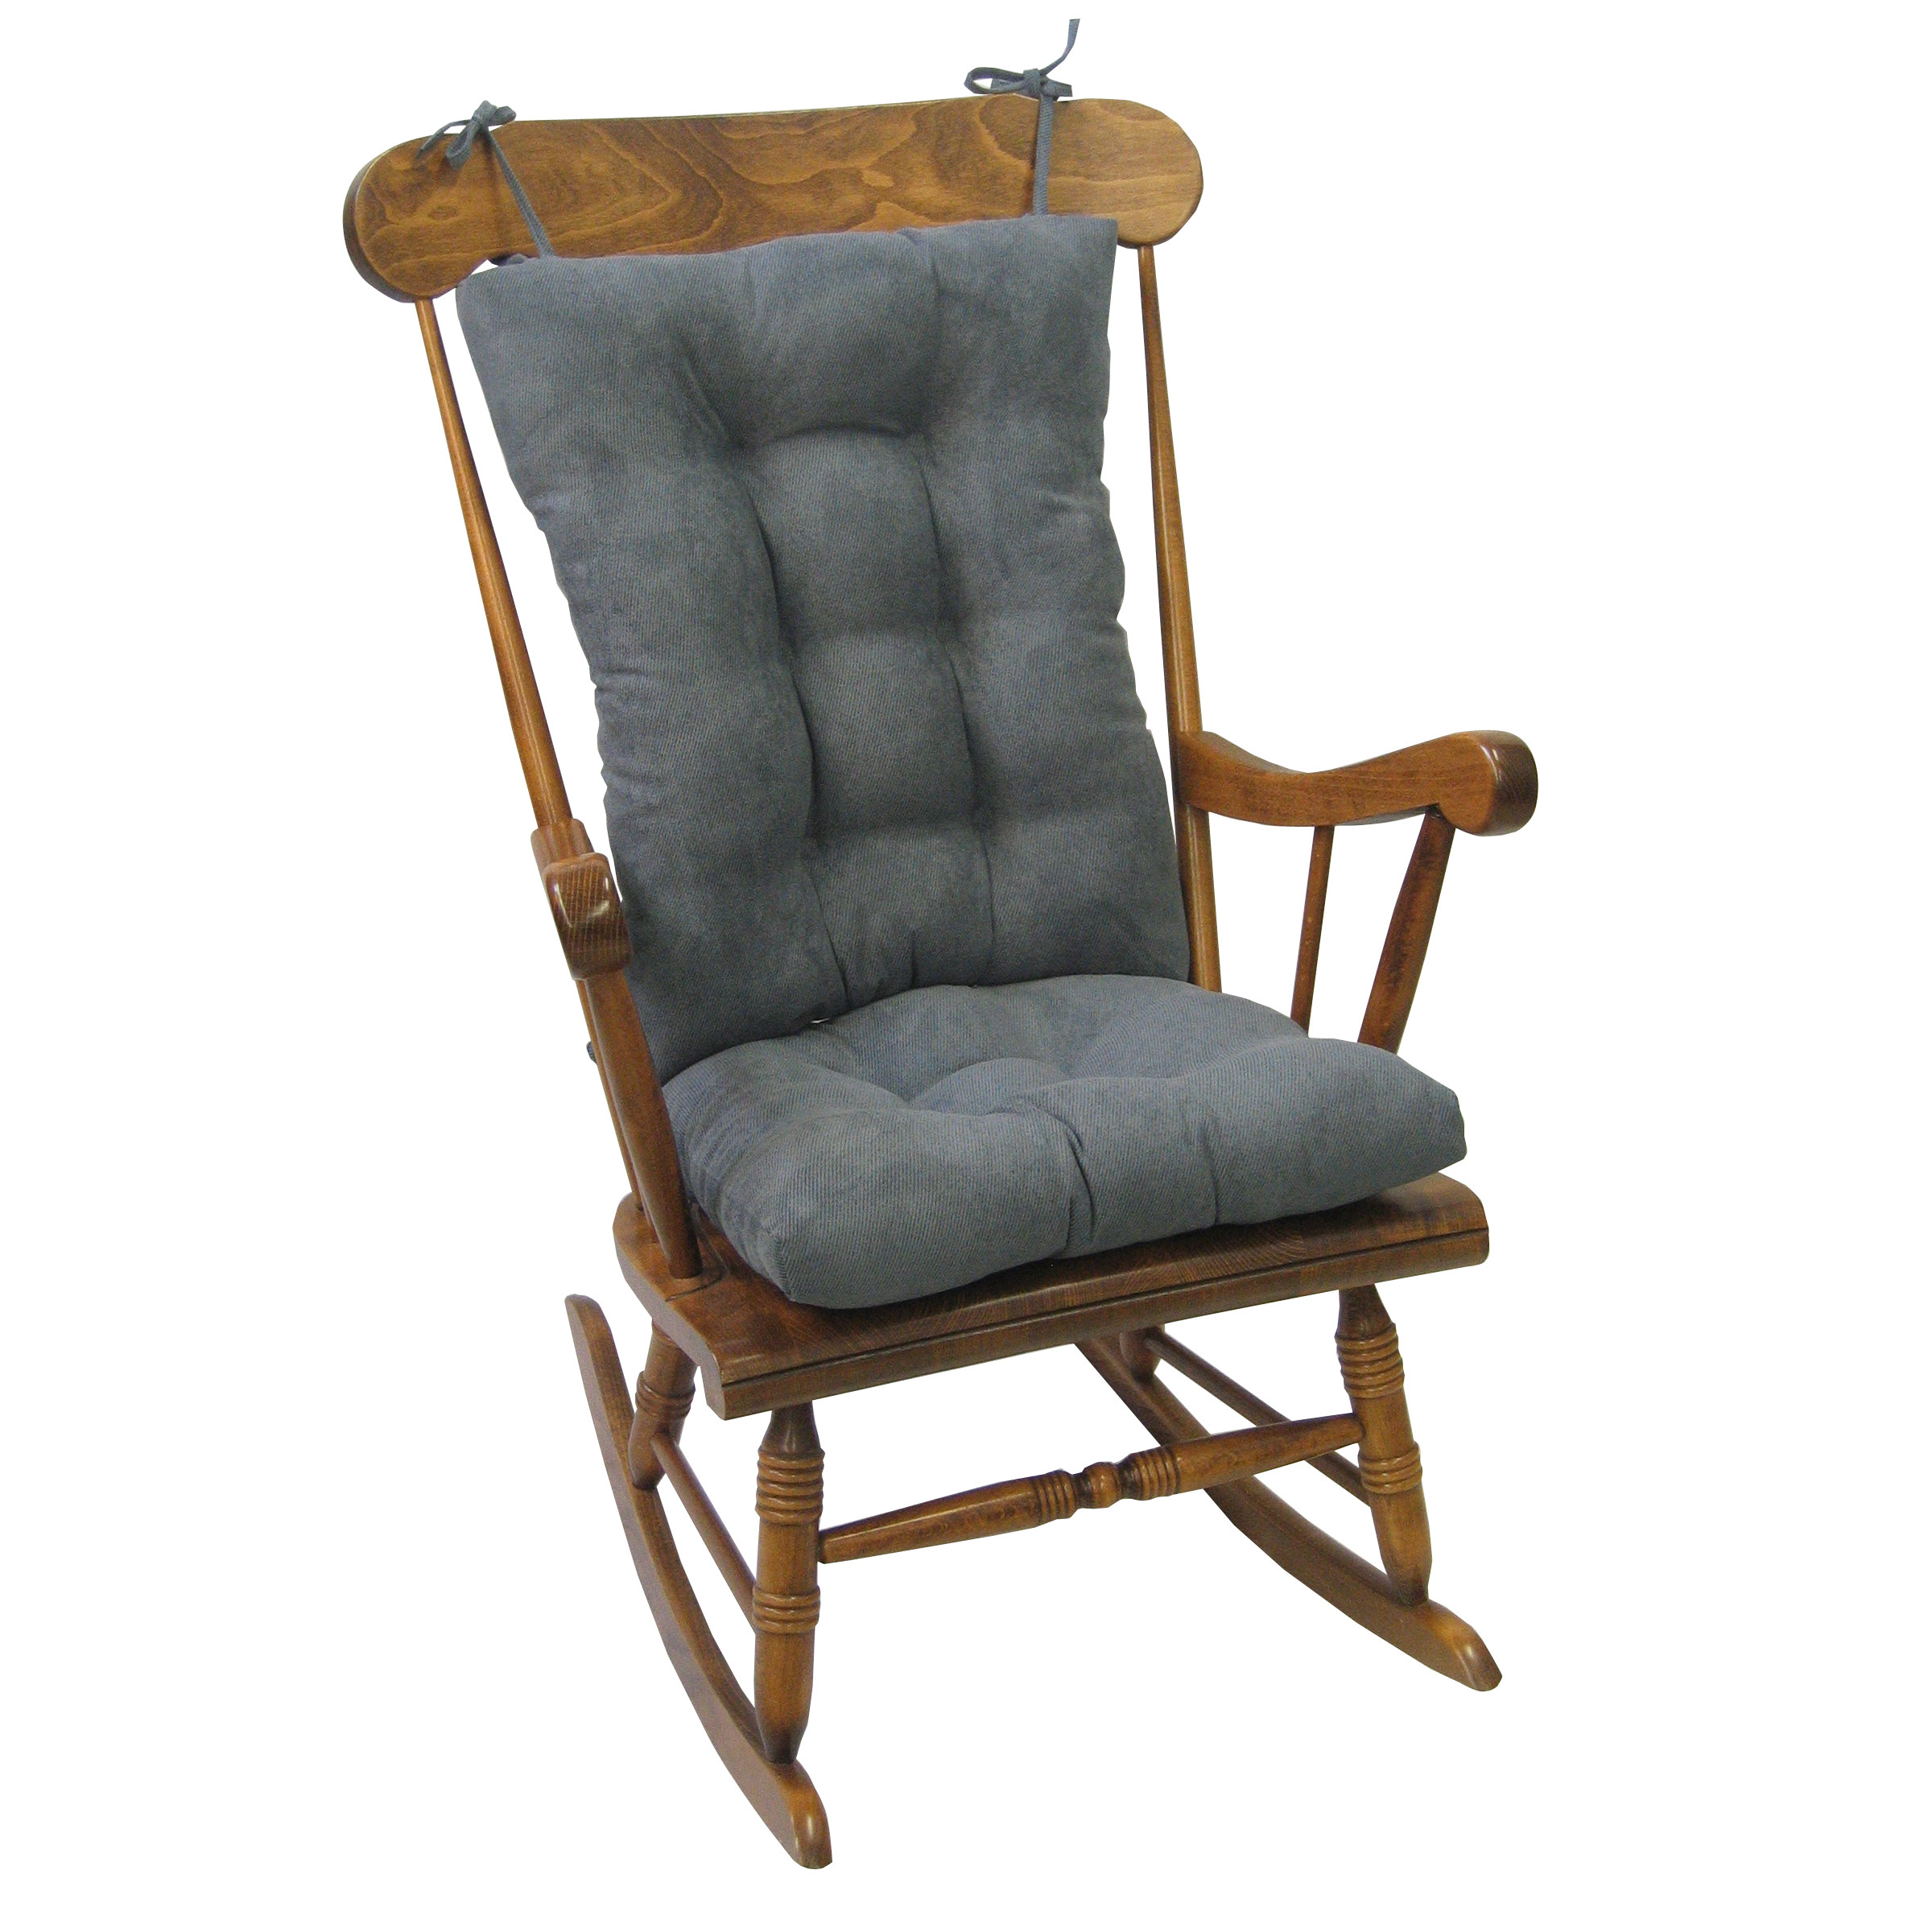 cushion for rocking chair